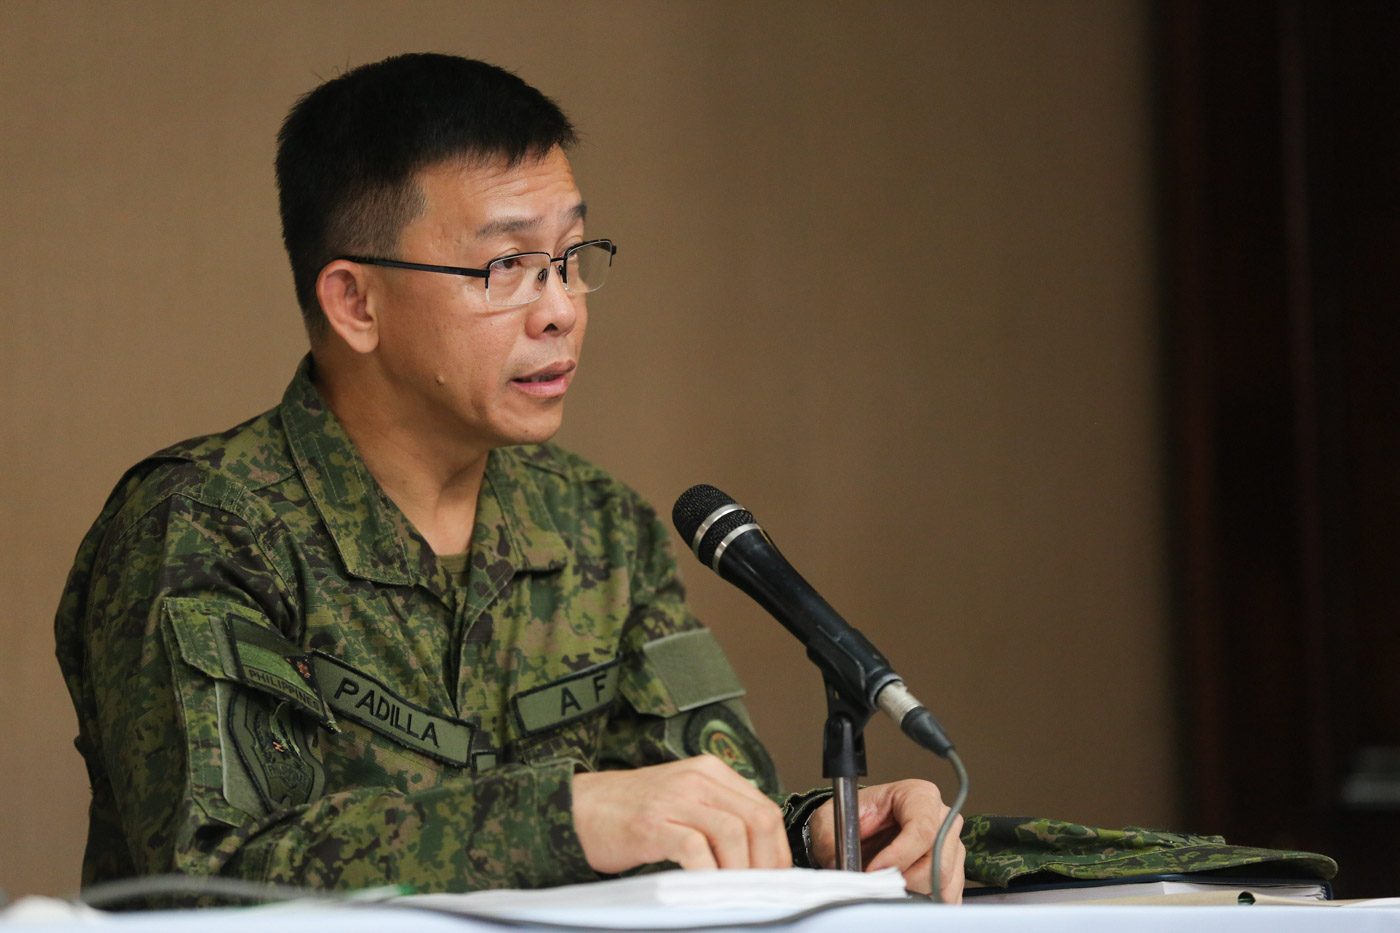 AFP appeals to netizens: Don’t spread Maute Group propaganda